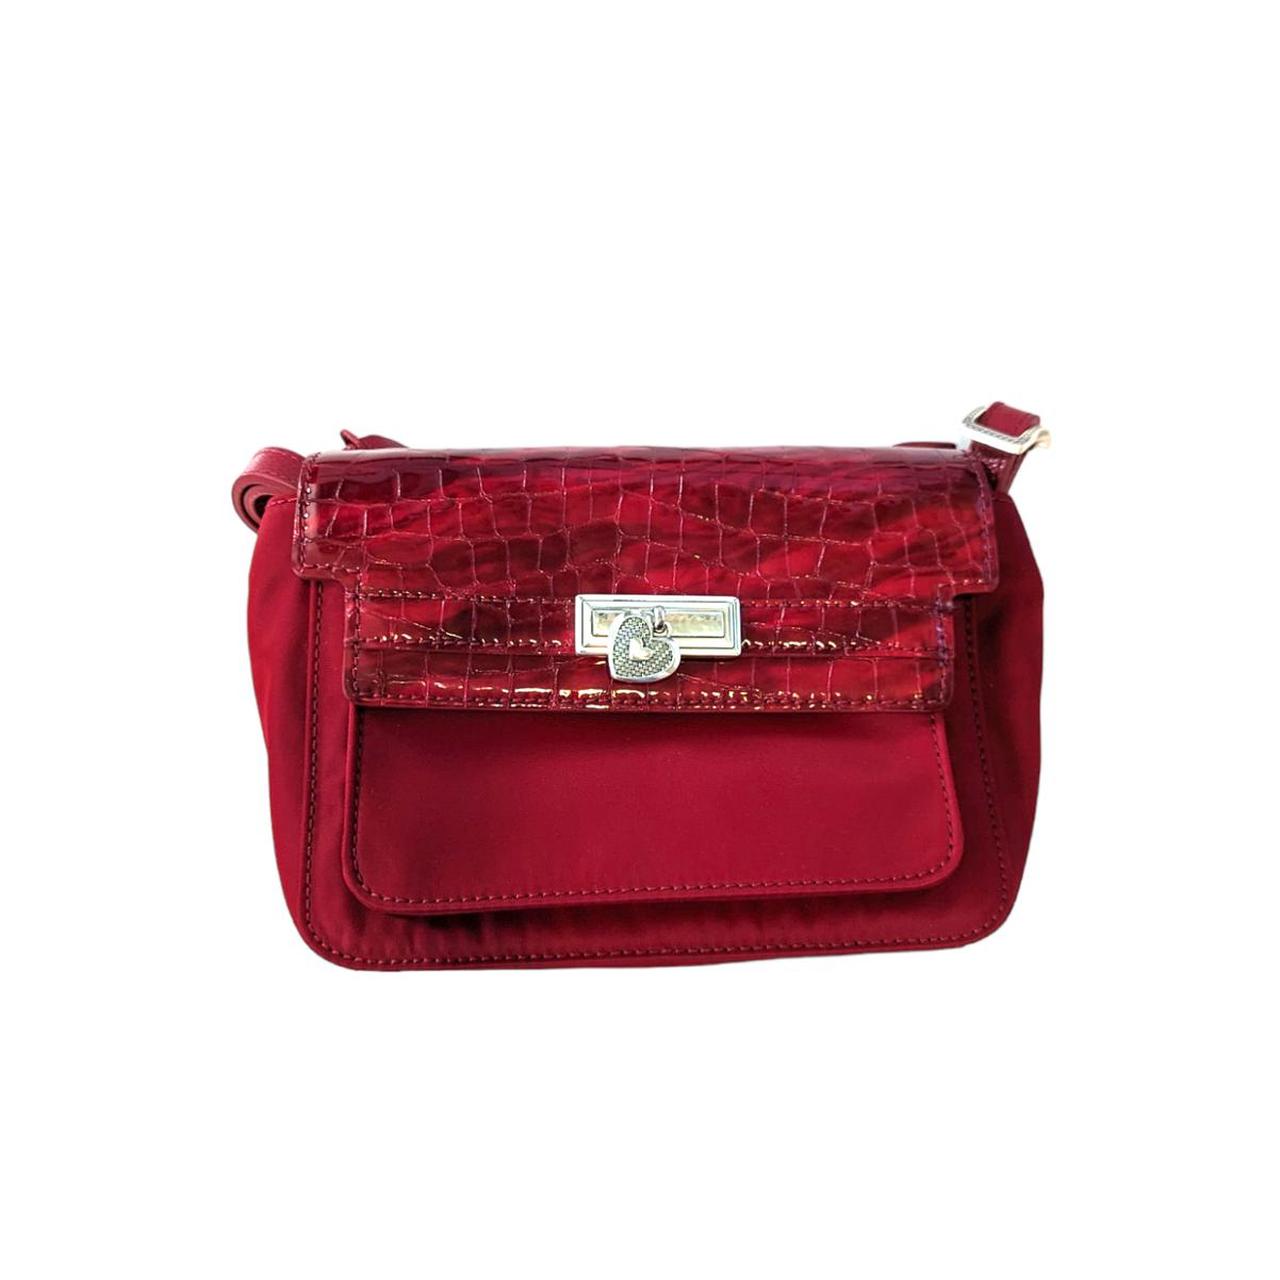 Brighton tote bag/purse red - Gem